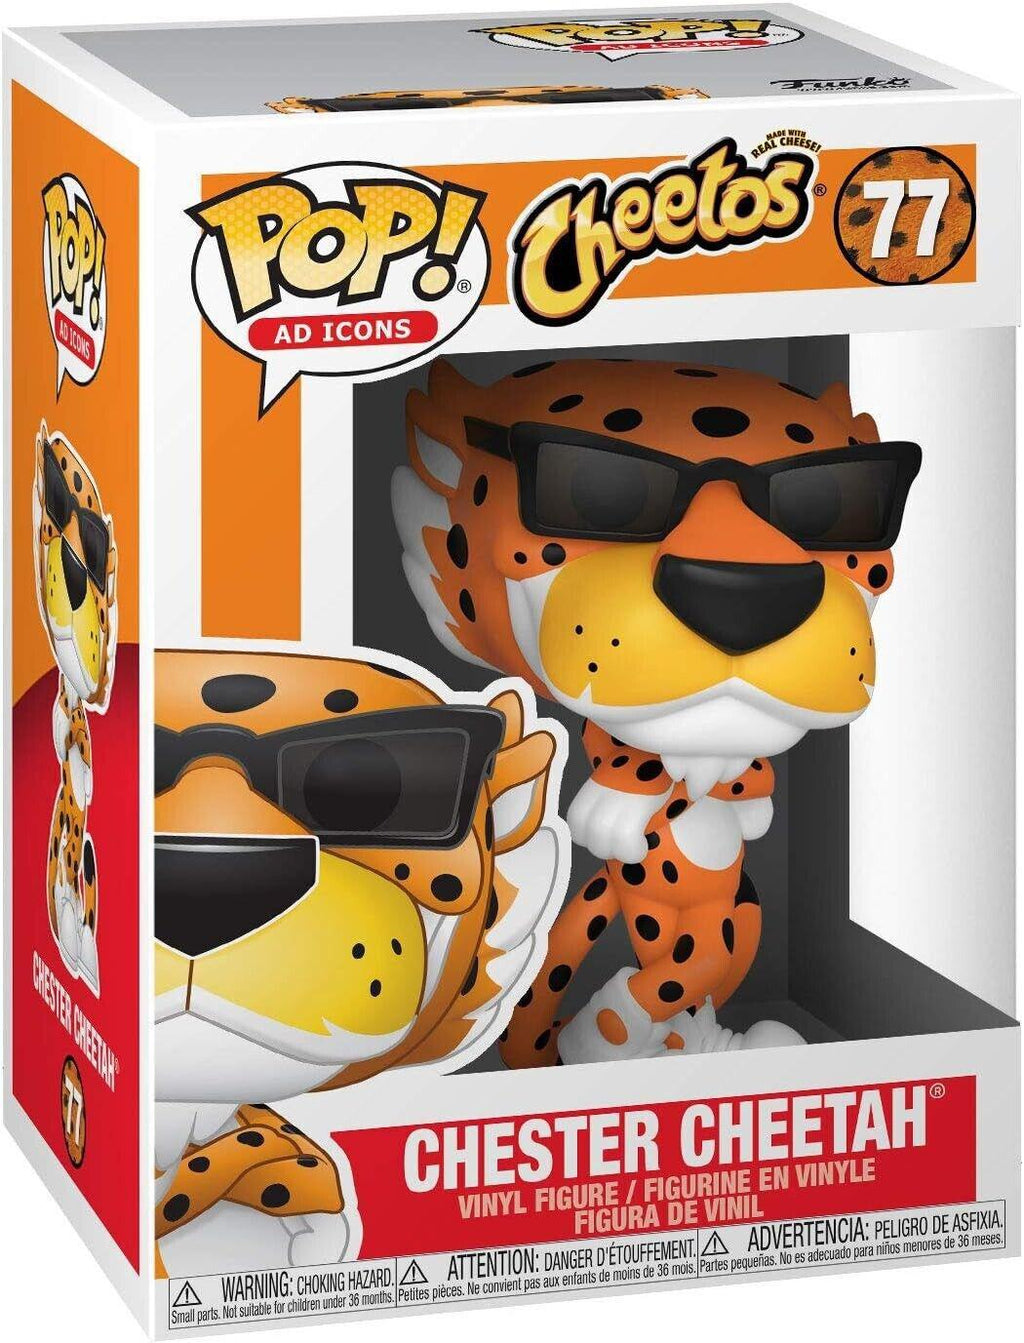 Pop Cheetos Chester Cheetah Vinyl Figure #77